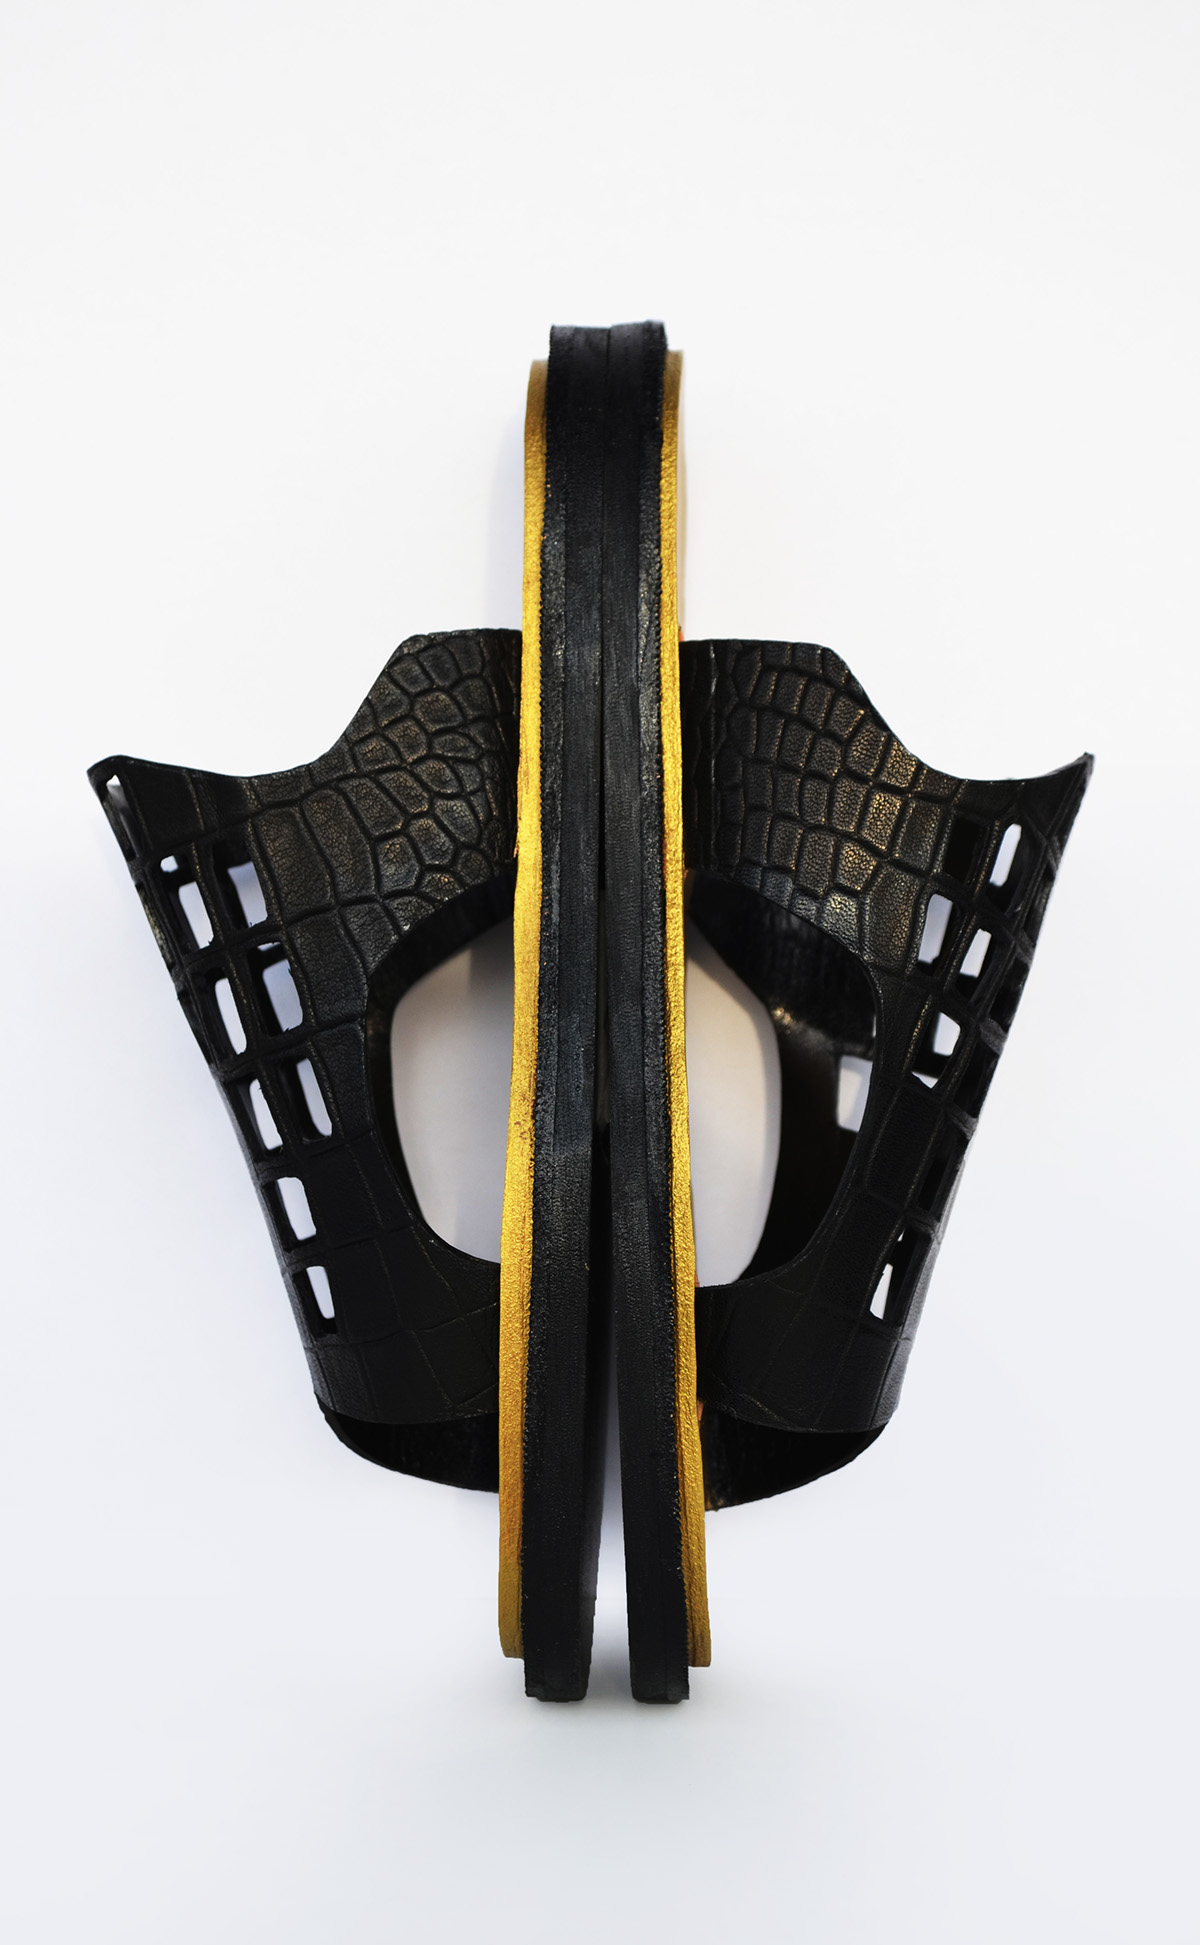 accessories design Box Bag handbag footwear Sandals leather crocodile exotics hardware mules handmade shoes